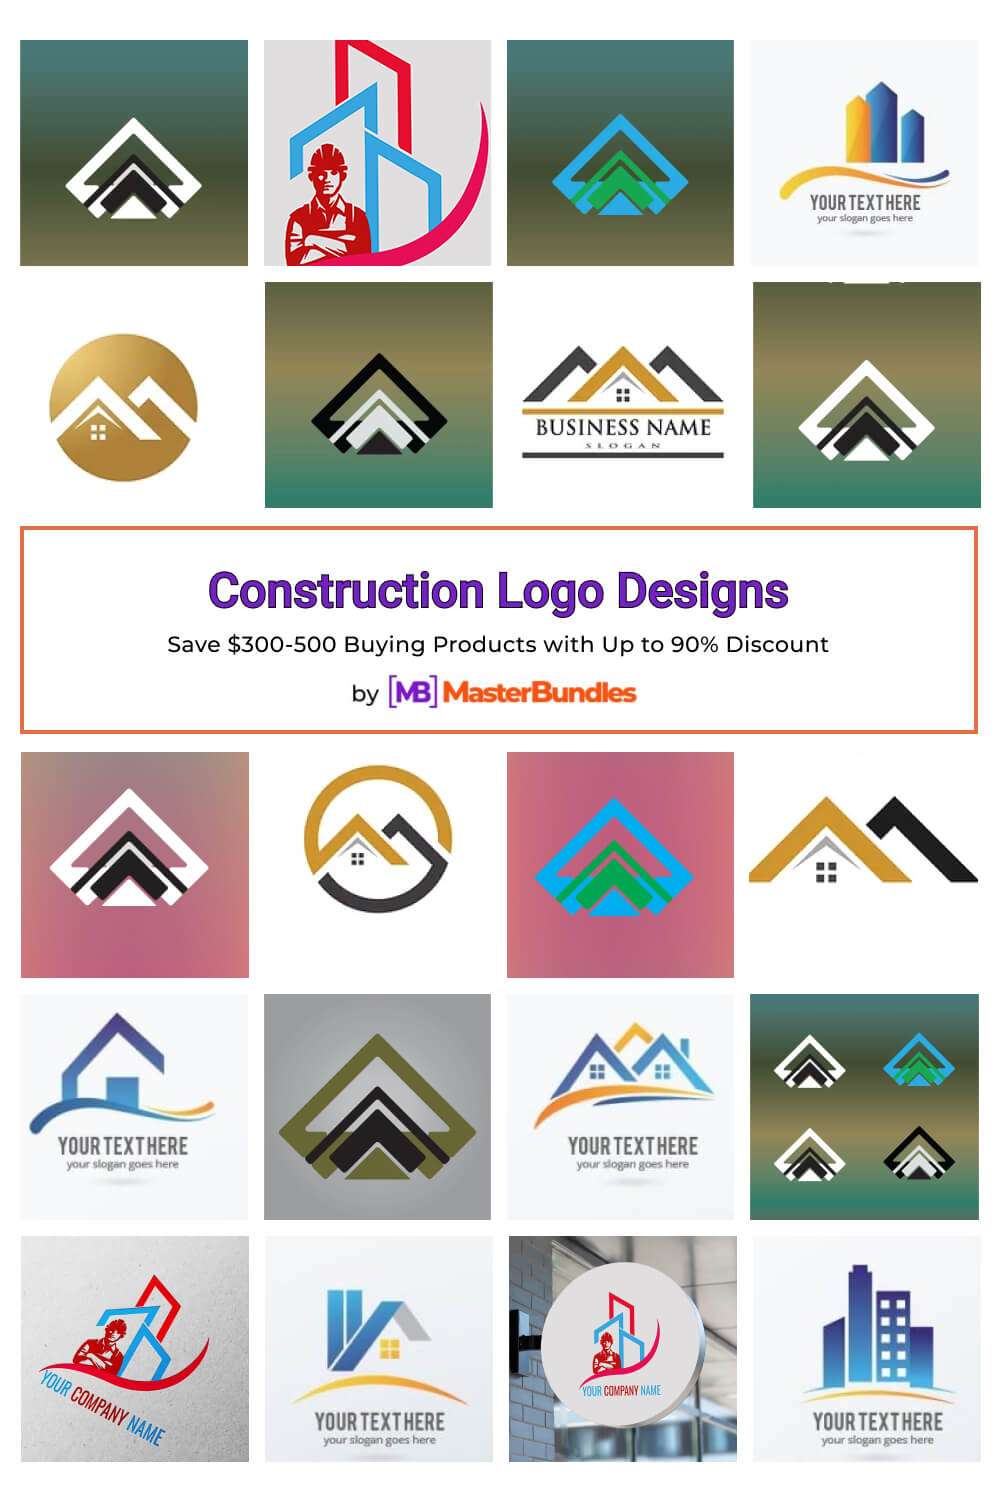 construction logo designs pinterest image.